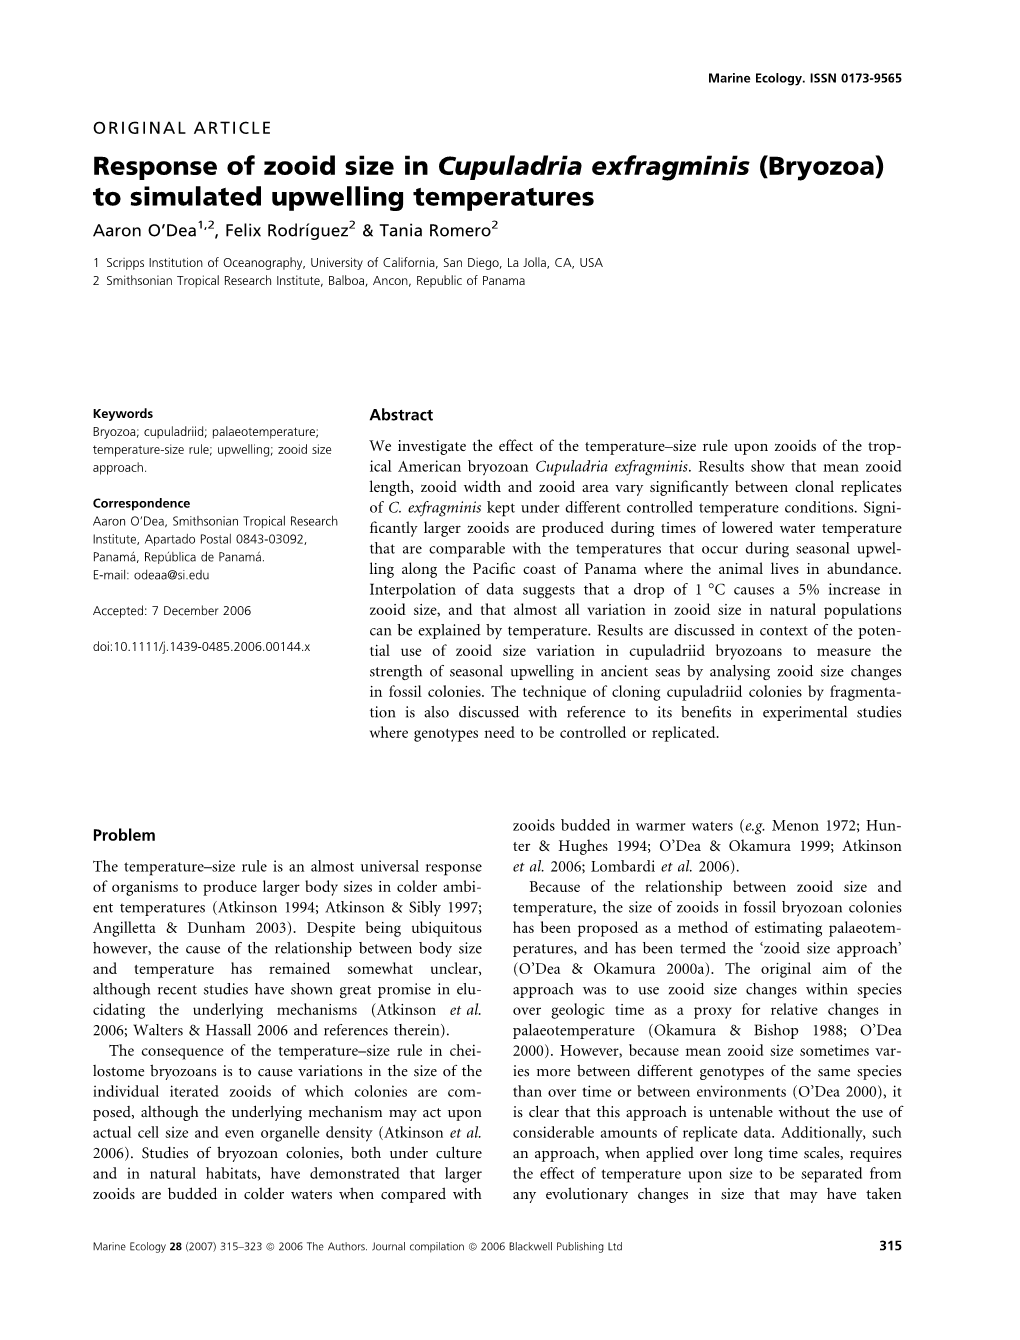 Response of Zooid Size in Cupuladria Exfragminis (Bryozoa) to Simulated Upwelling Temperatures Aaron O’Dea1,2, Felix Rodrı´Guez2 & Tania Romero2